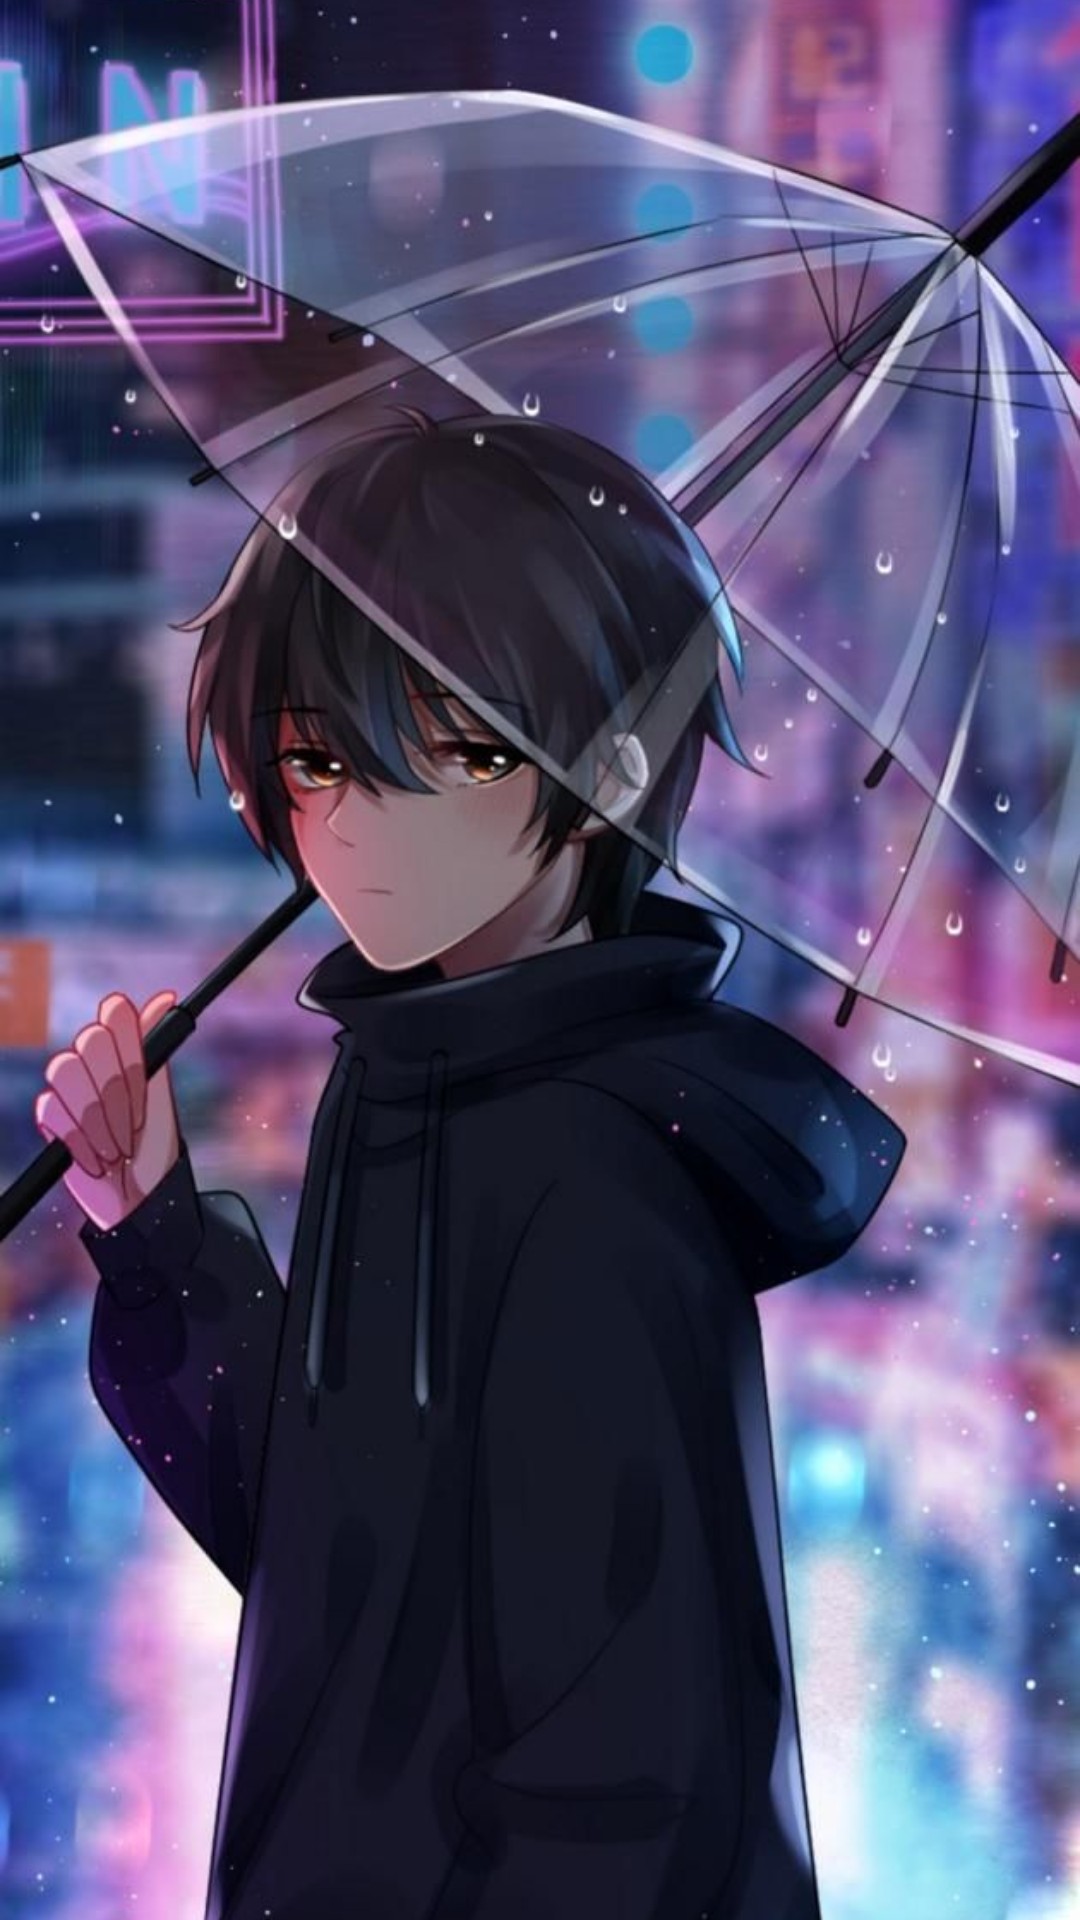 Dark Anime Boy Wallpapers: Top 10 Best Dark Anime Boy iPhone Wallpapers [  HQ ]